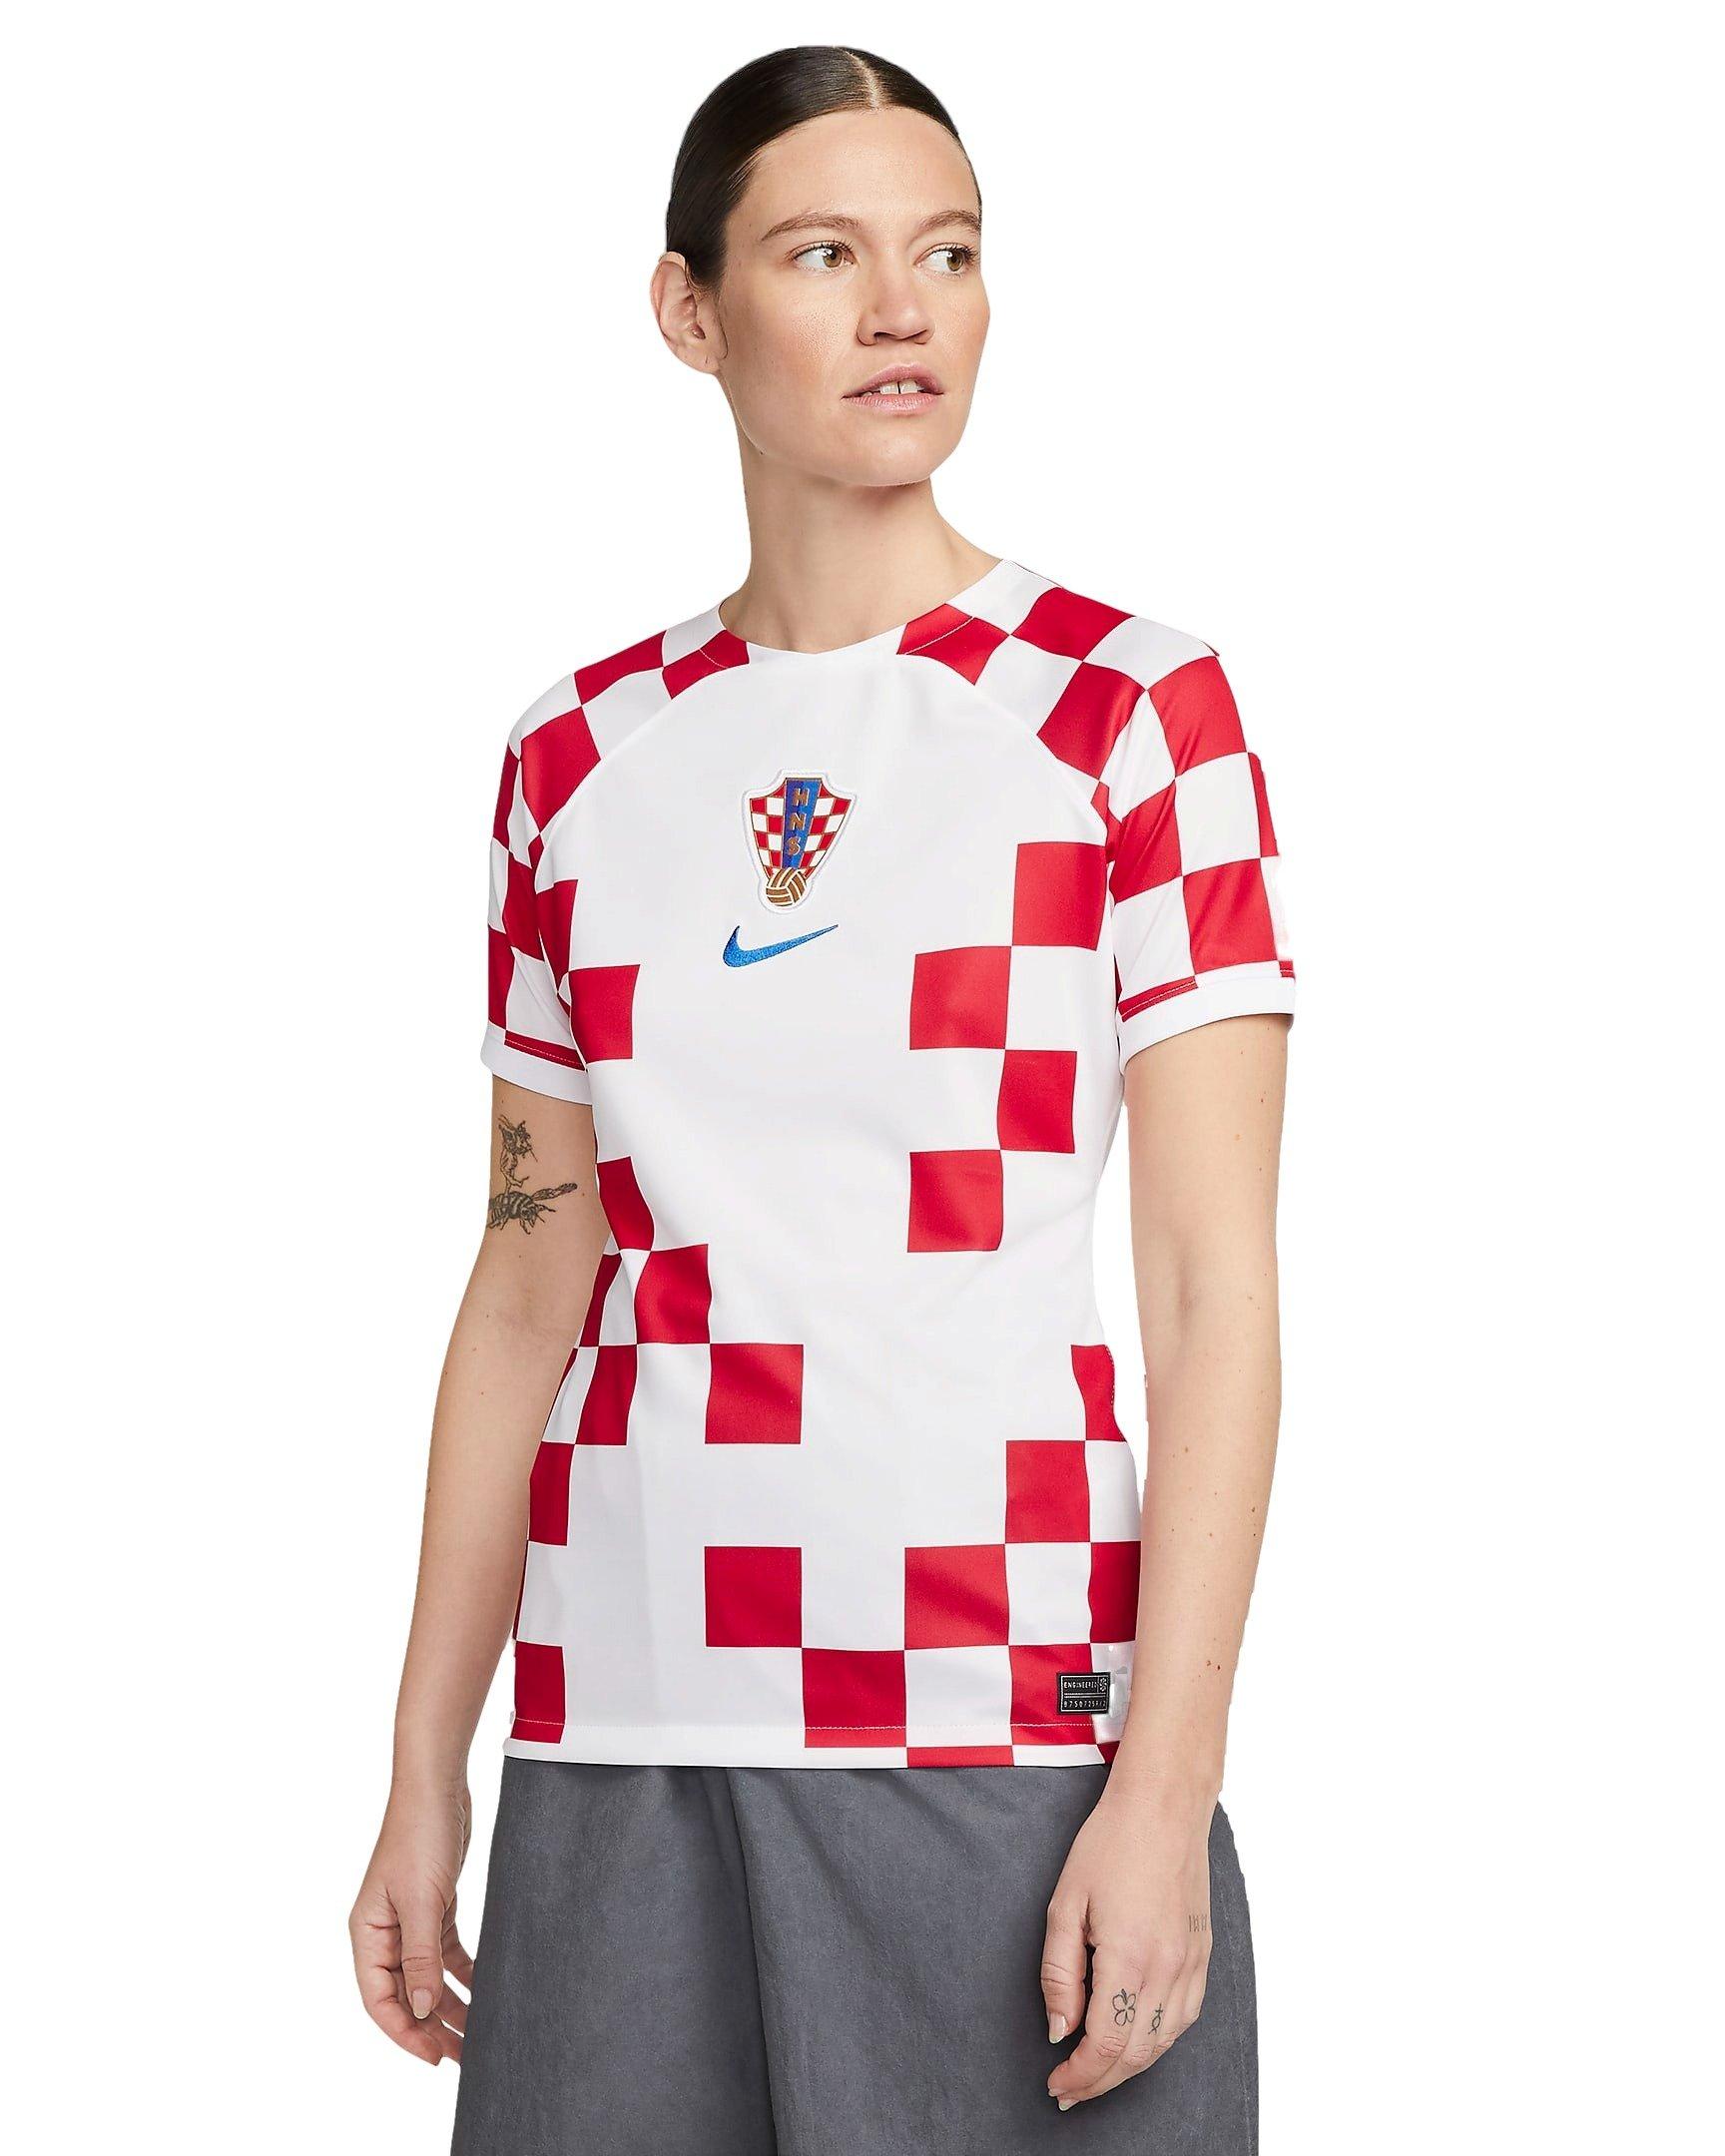 croatia soccer jersey near me